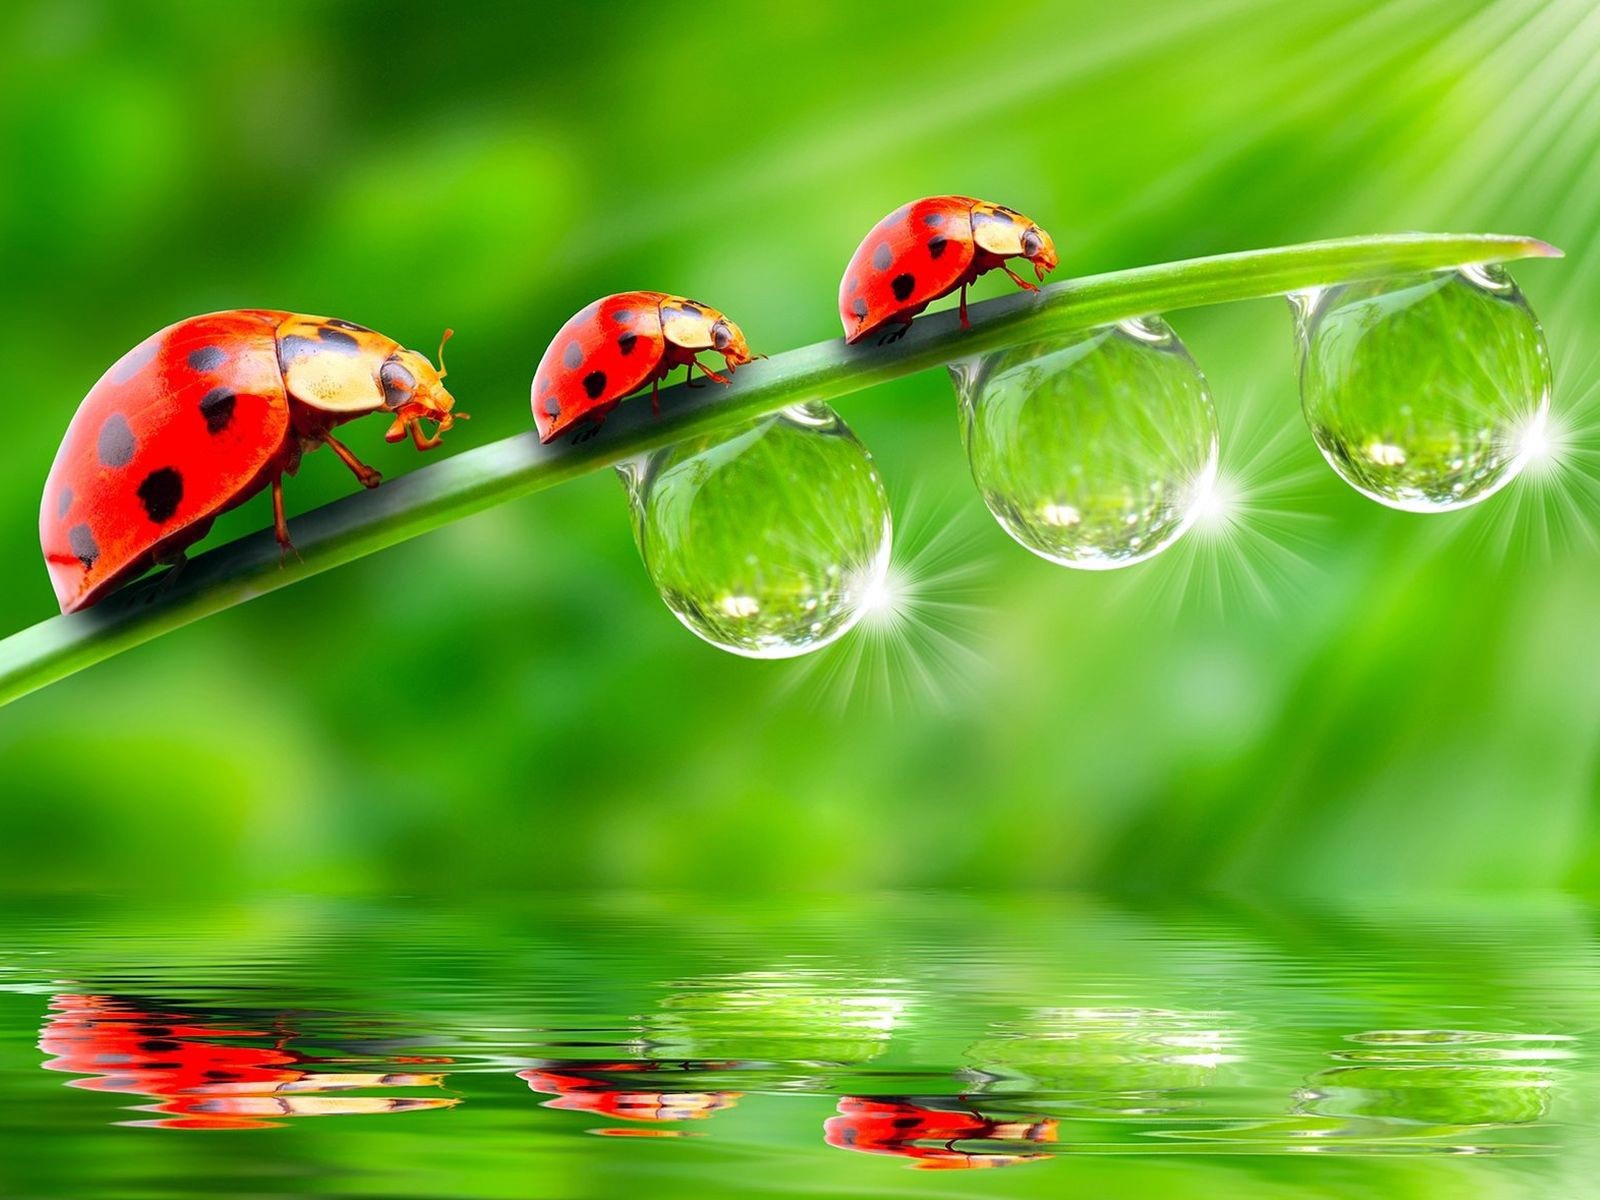 Three-ladybugs-on-green-leaves-drops-of-water_1600x1200.jpg